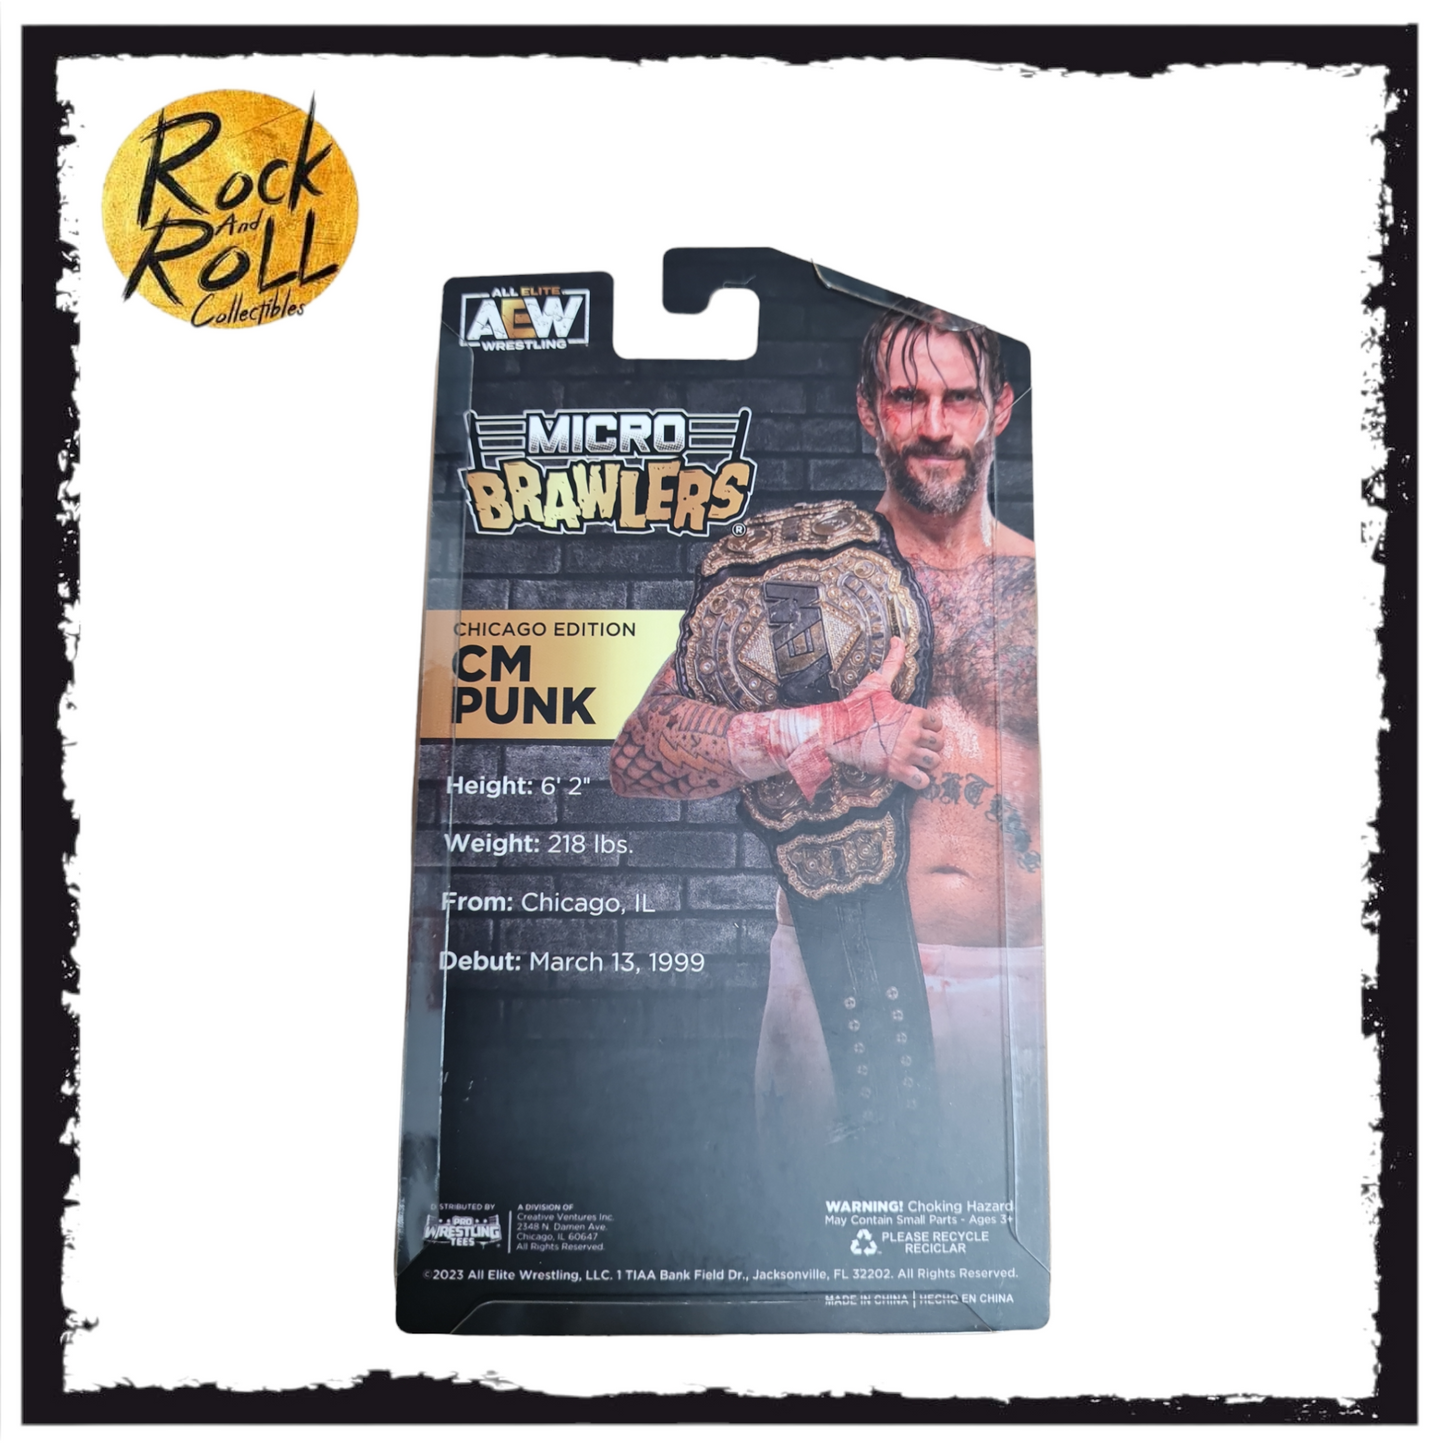 CM Punk (Chicago Edition) AEW Micro Brawlers